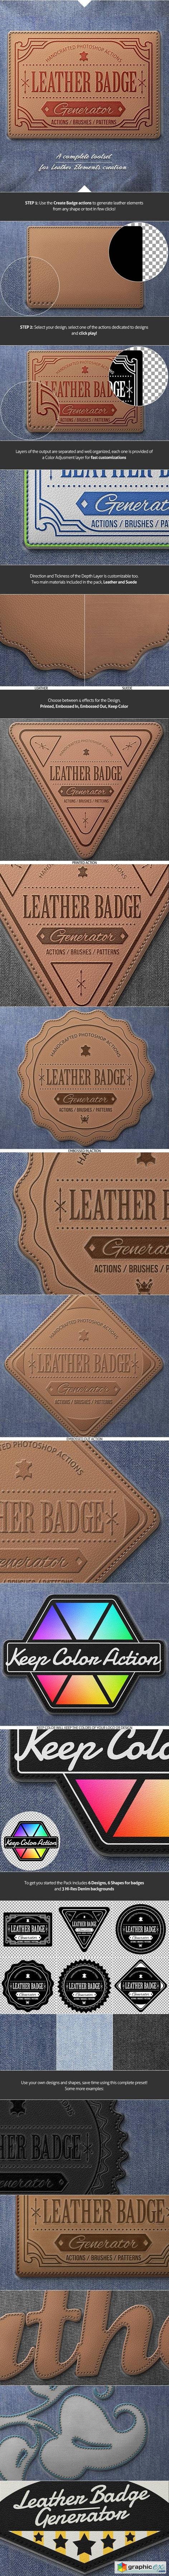 Leather Badge Generator - Photoshop Actions